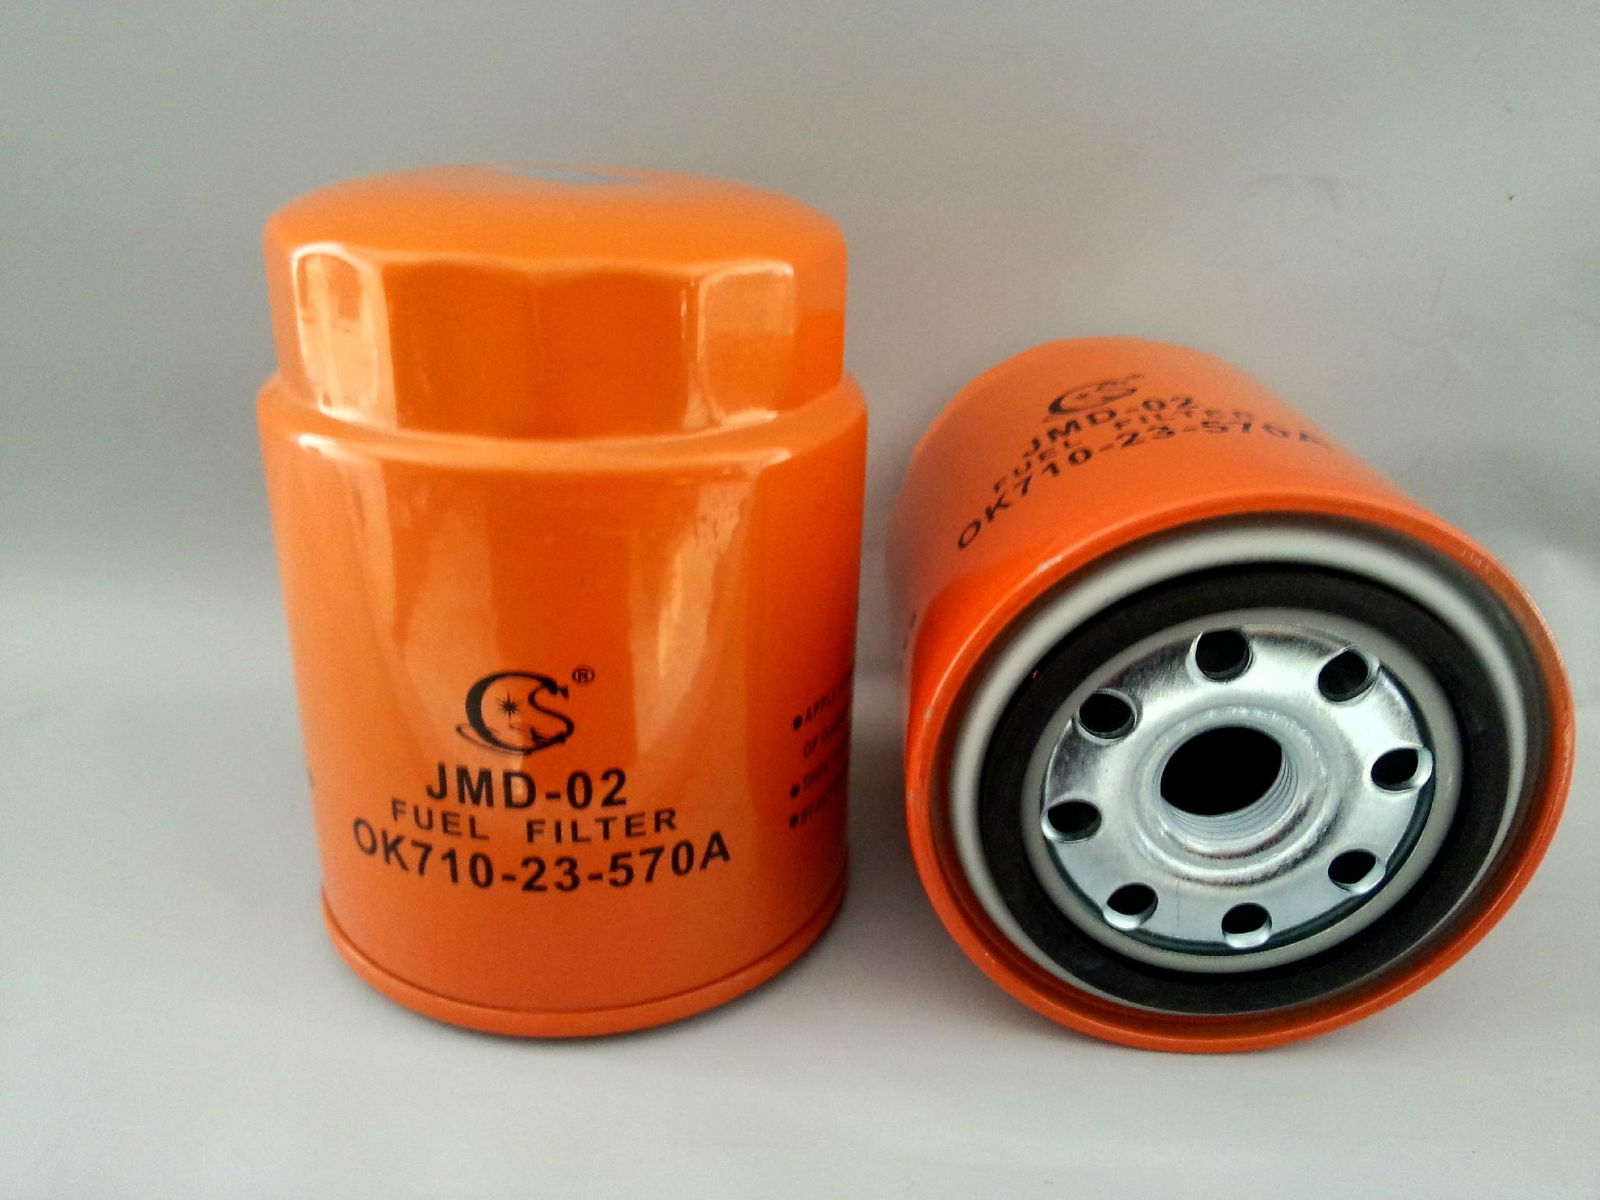 fuel filter for KIA OK710-23-570A 2